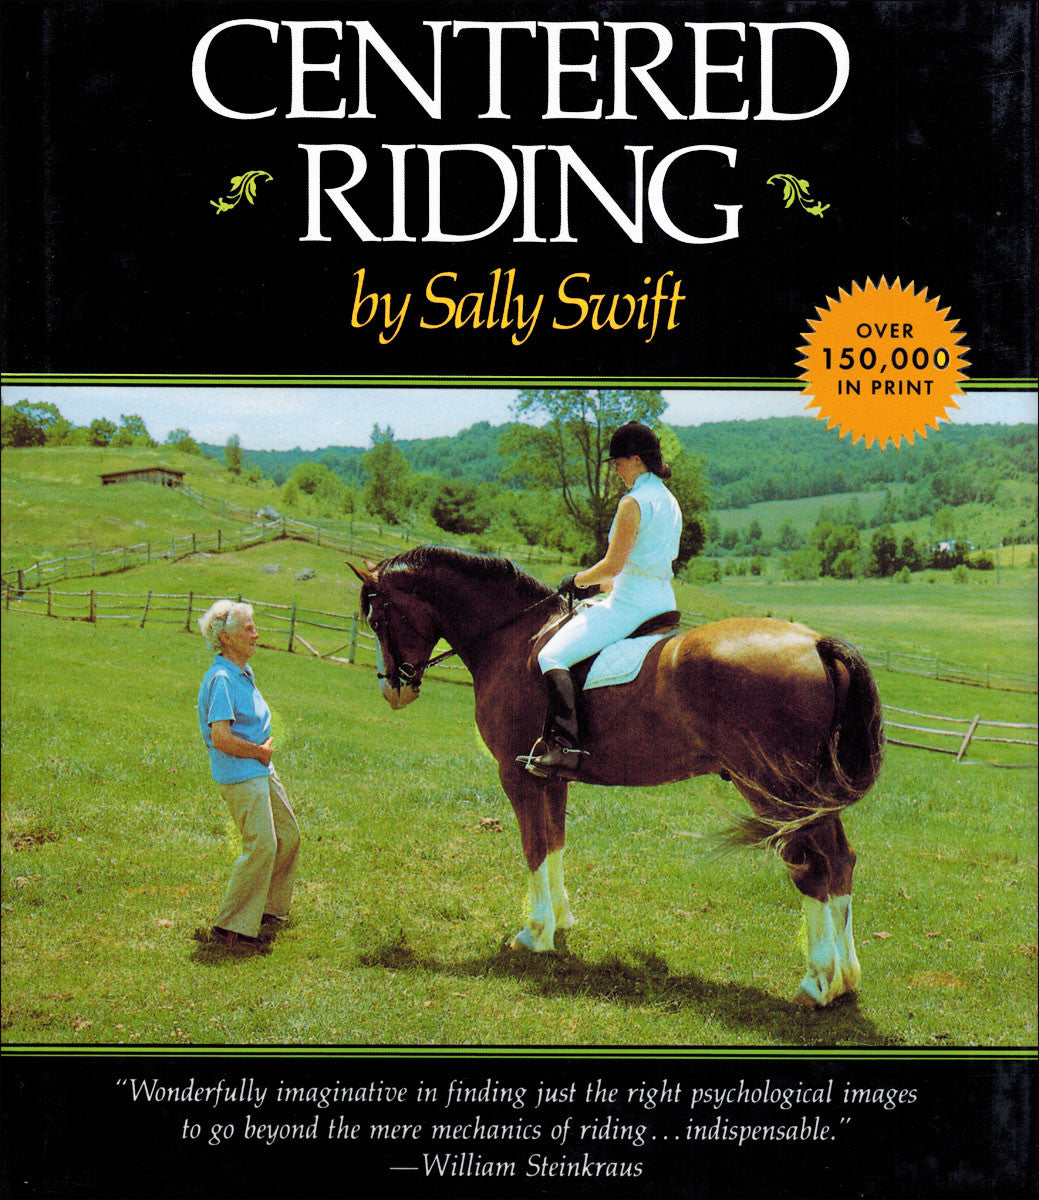 Centered Riding - BooksOnHorses